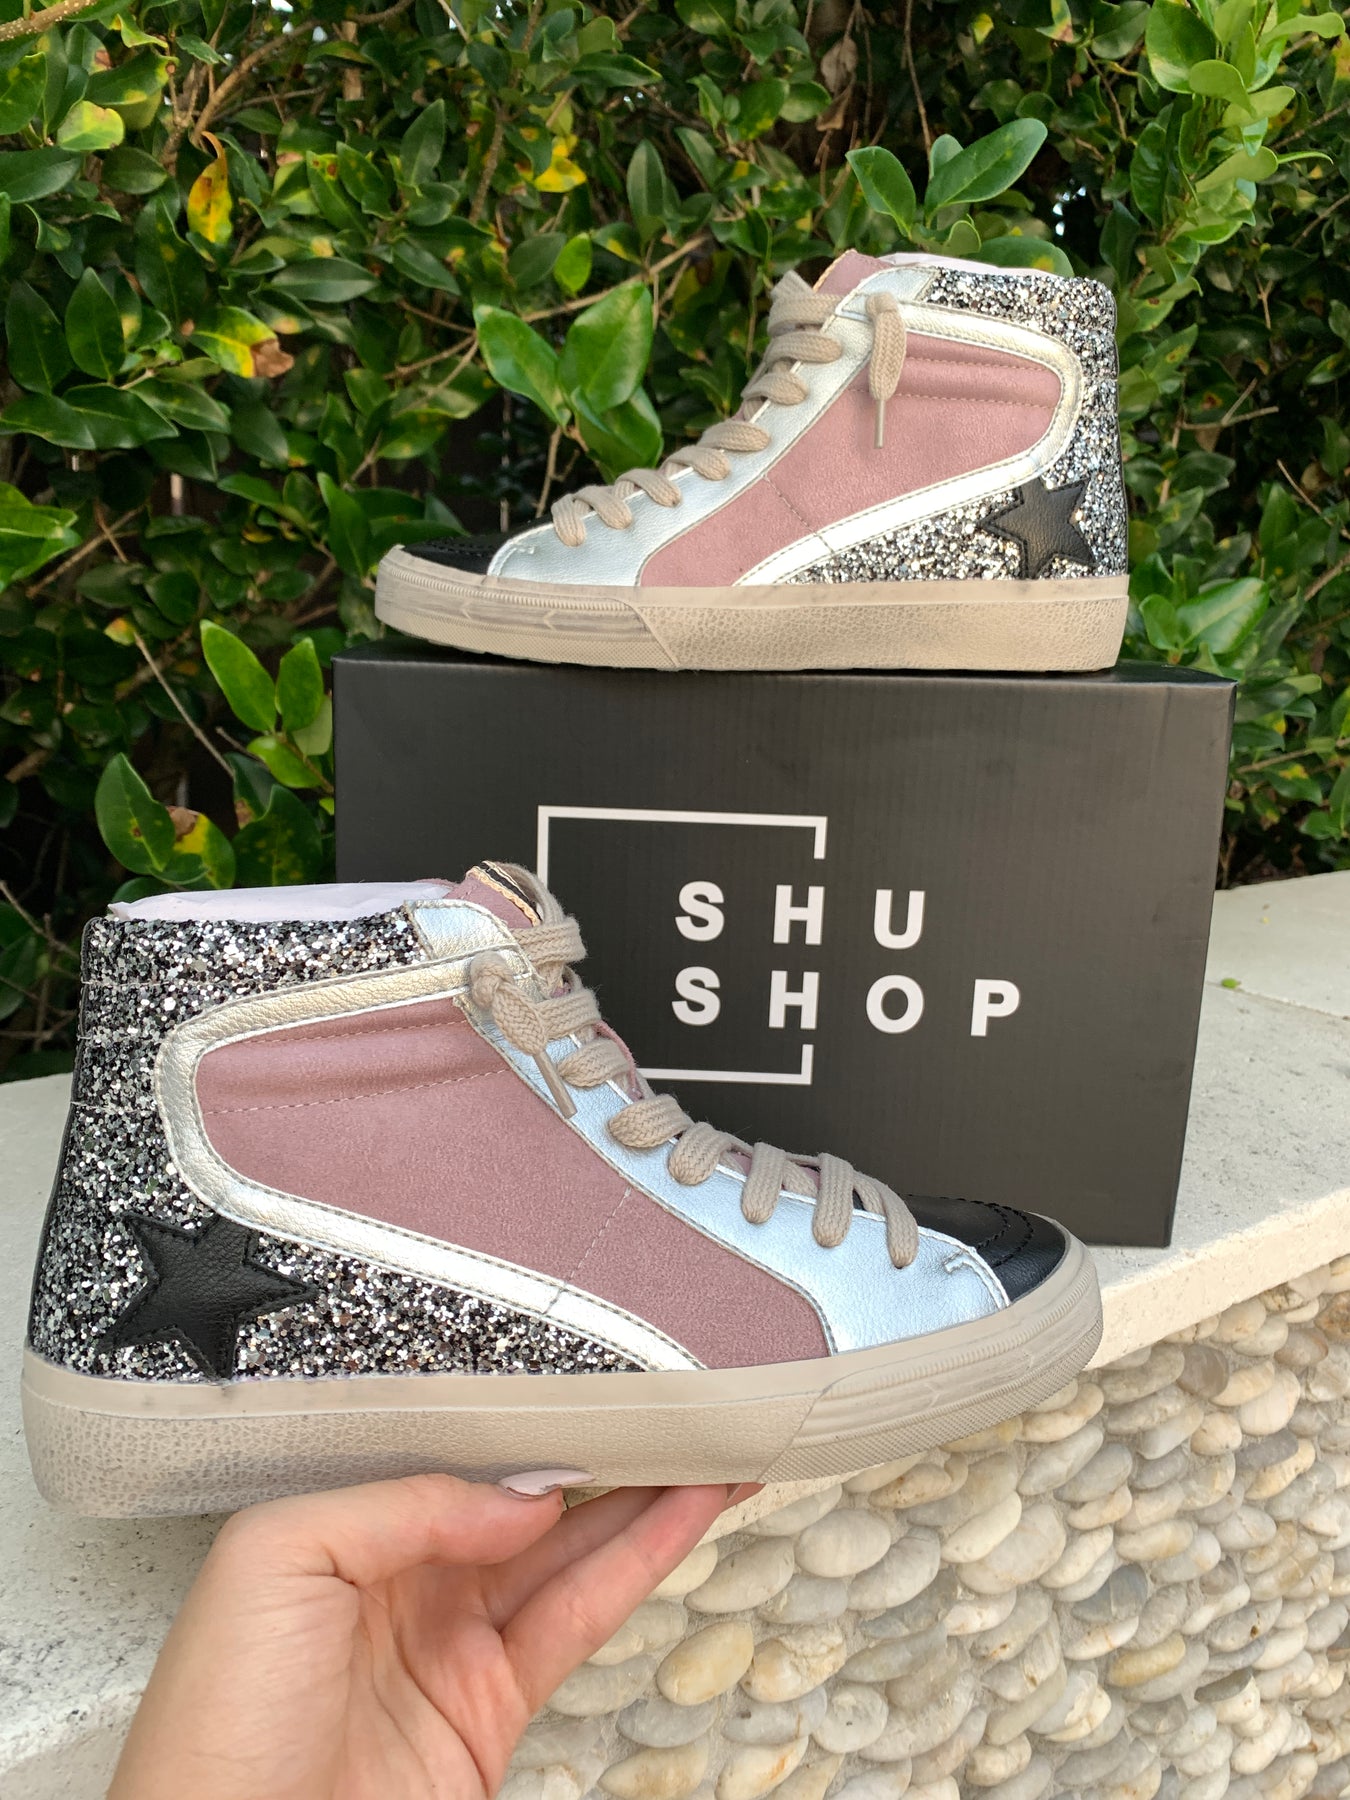 Shushop Hightop Sparkle Sneakers at Leaf Boutique 8